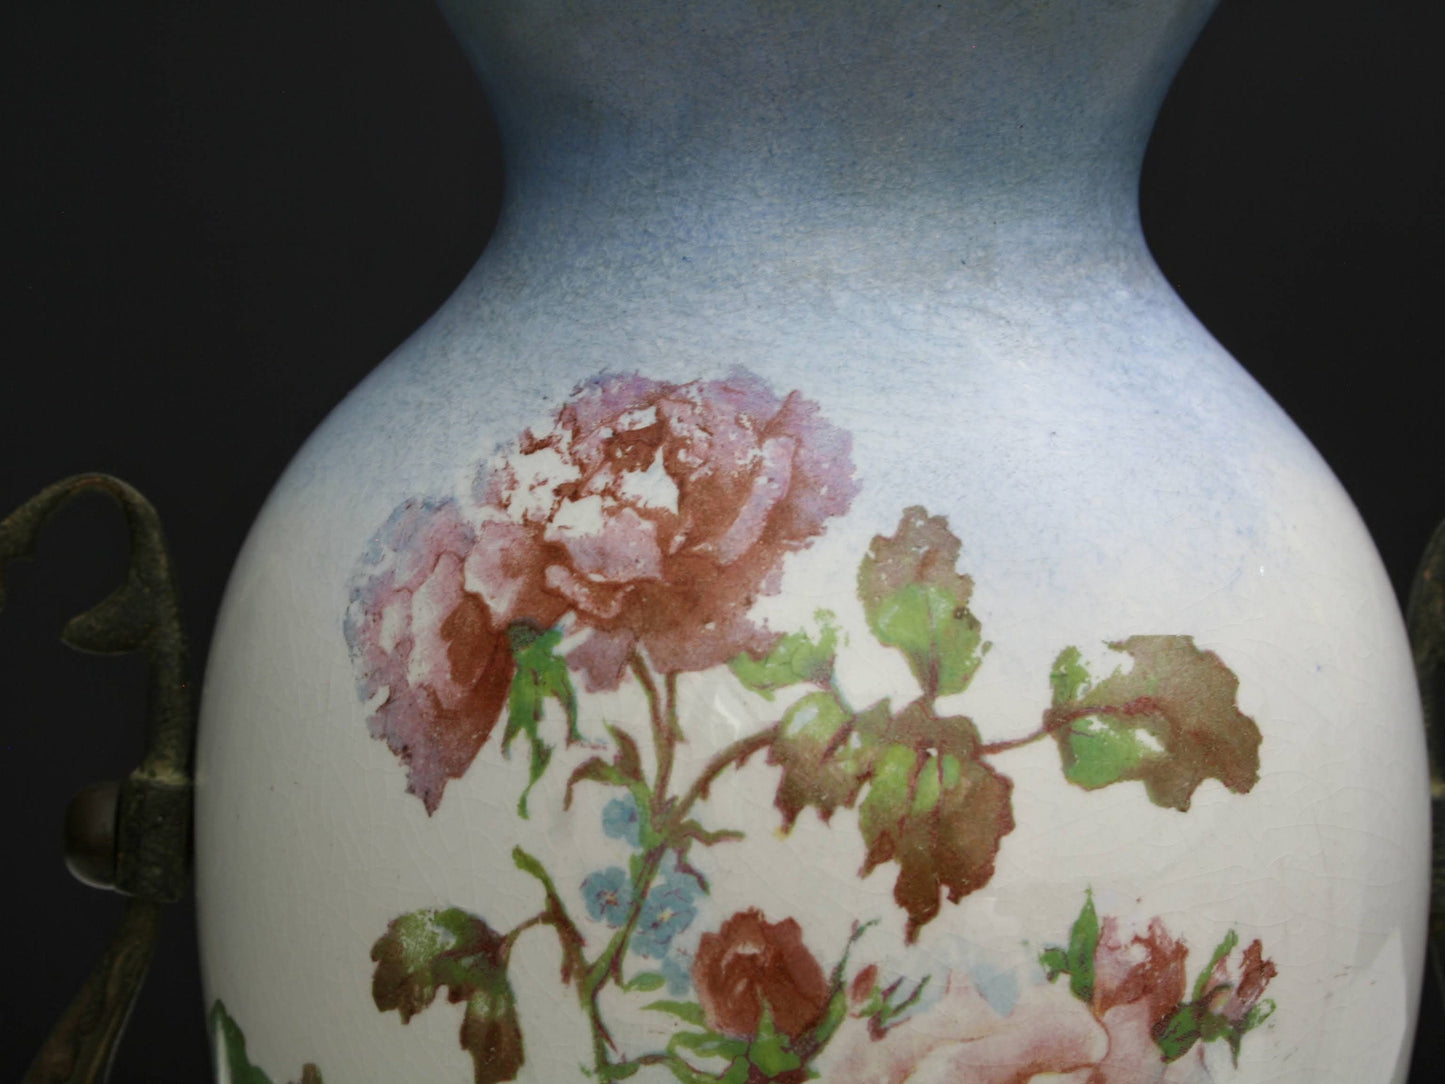 French Antique- Ceramic Vases |  French Decor-Unique Flower Vases